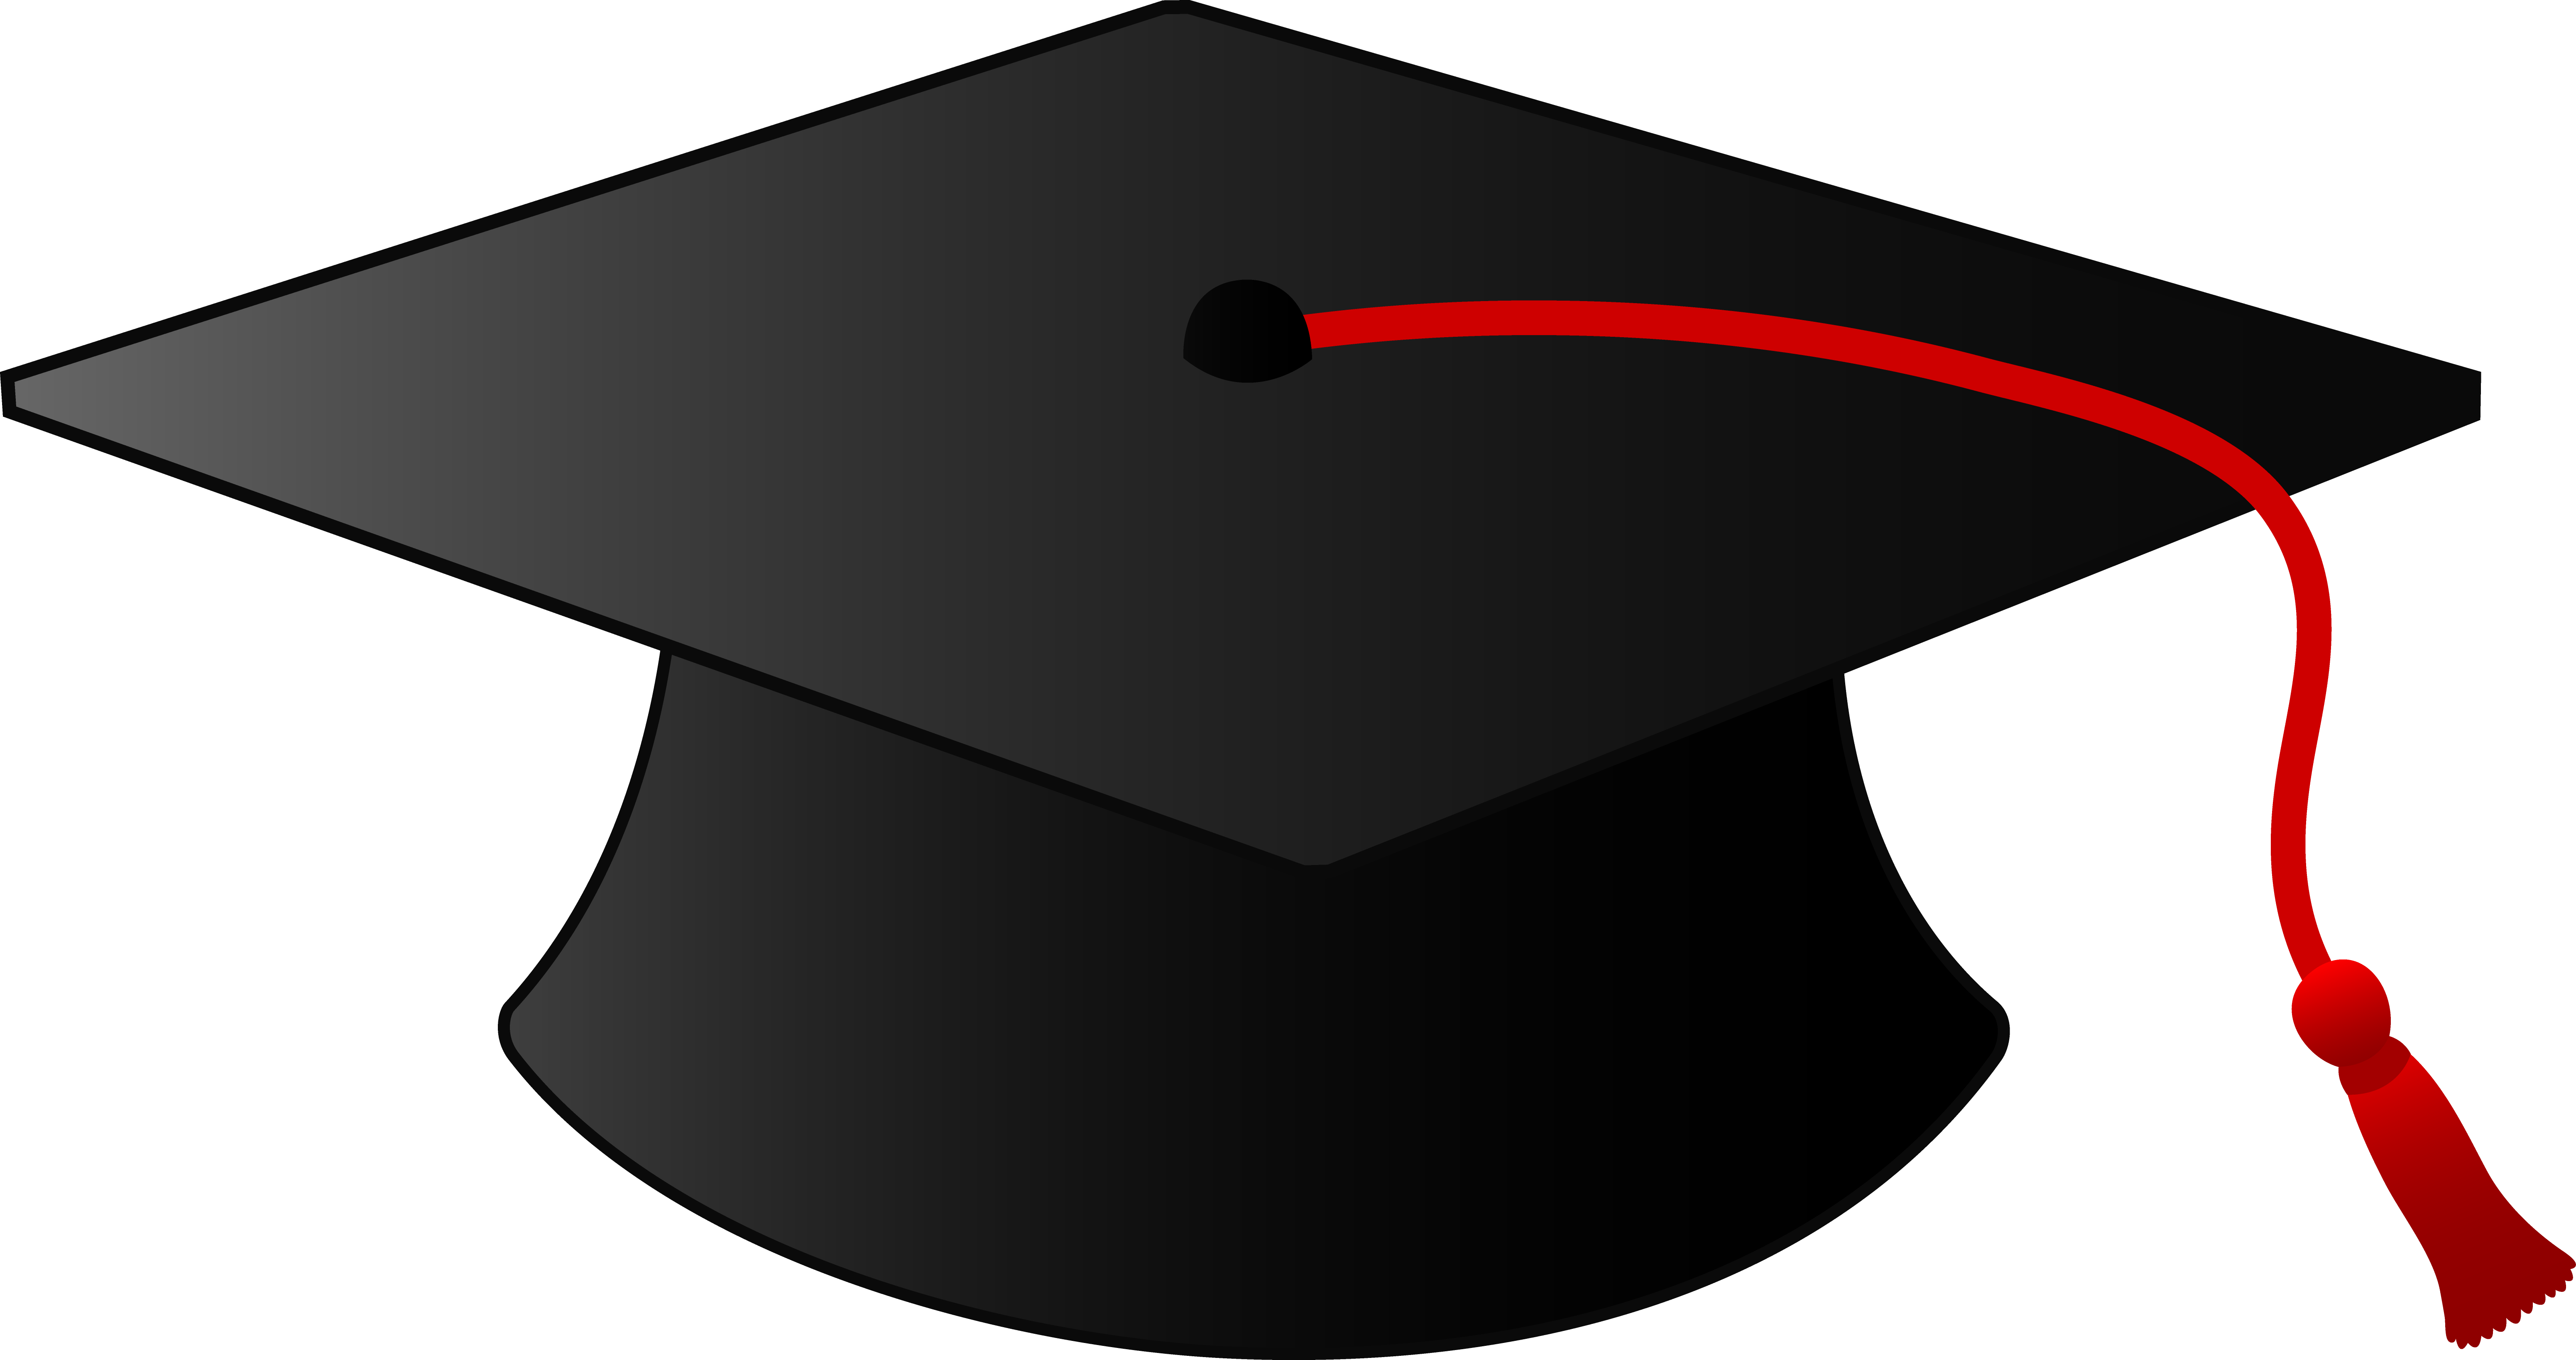 free graduation hat clipart - photo #17